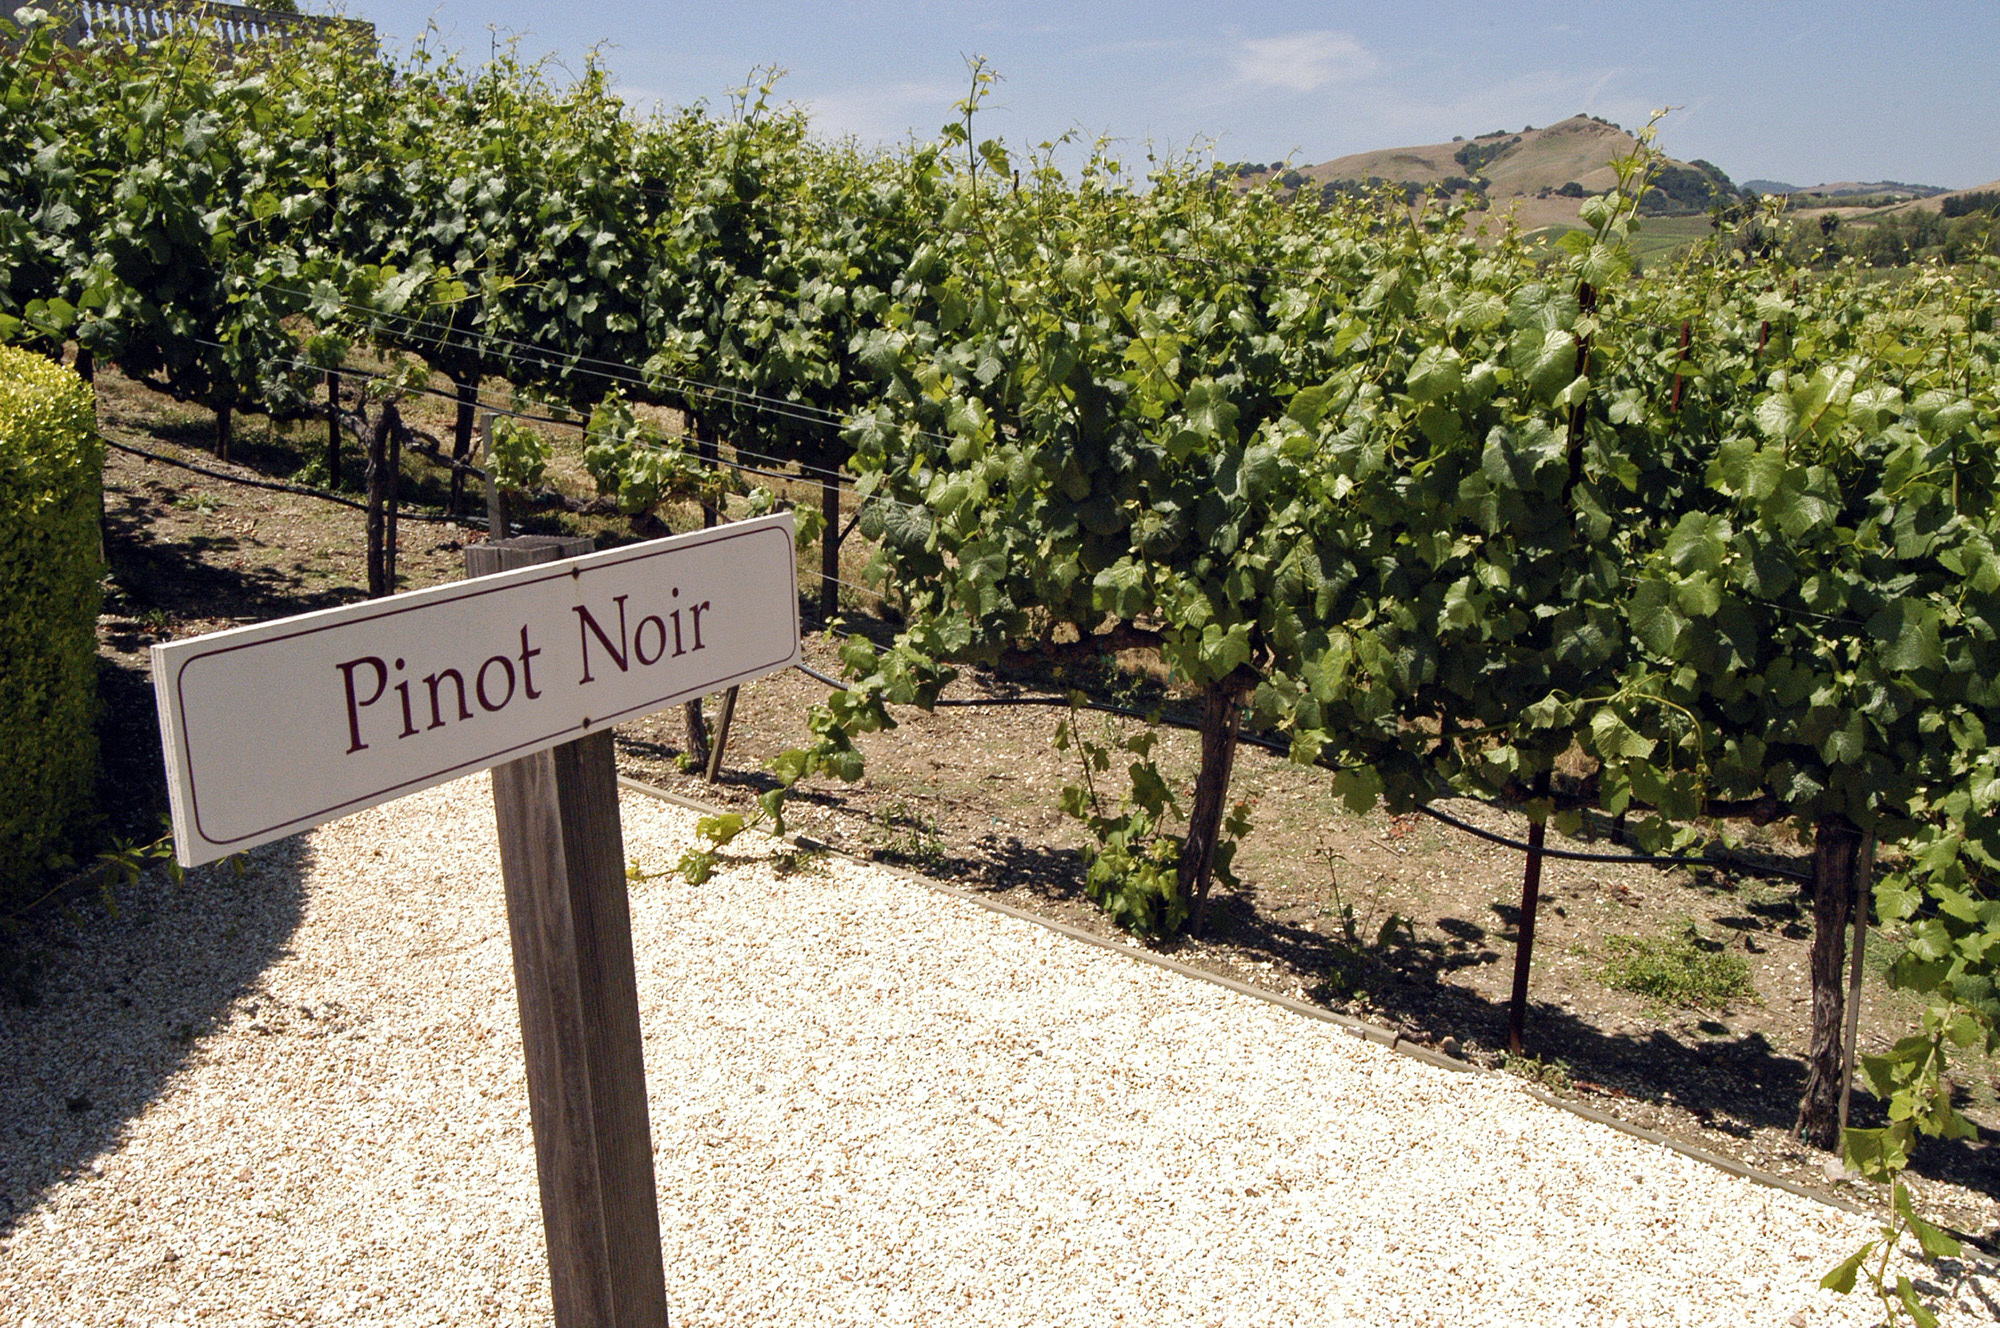 A vineyard in Napa Valley, Calif.